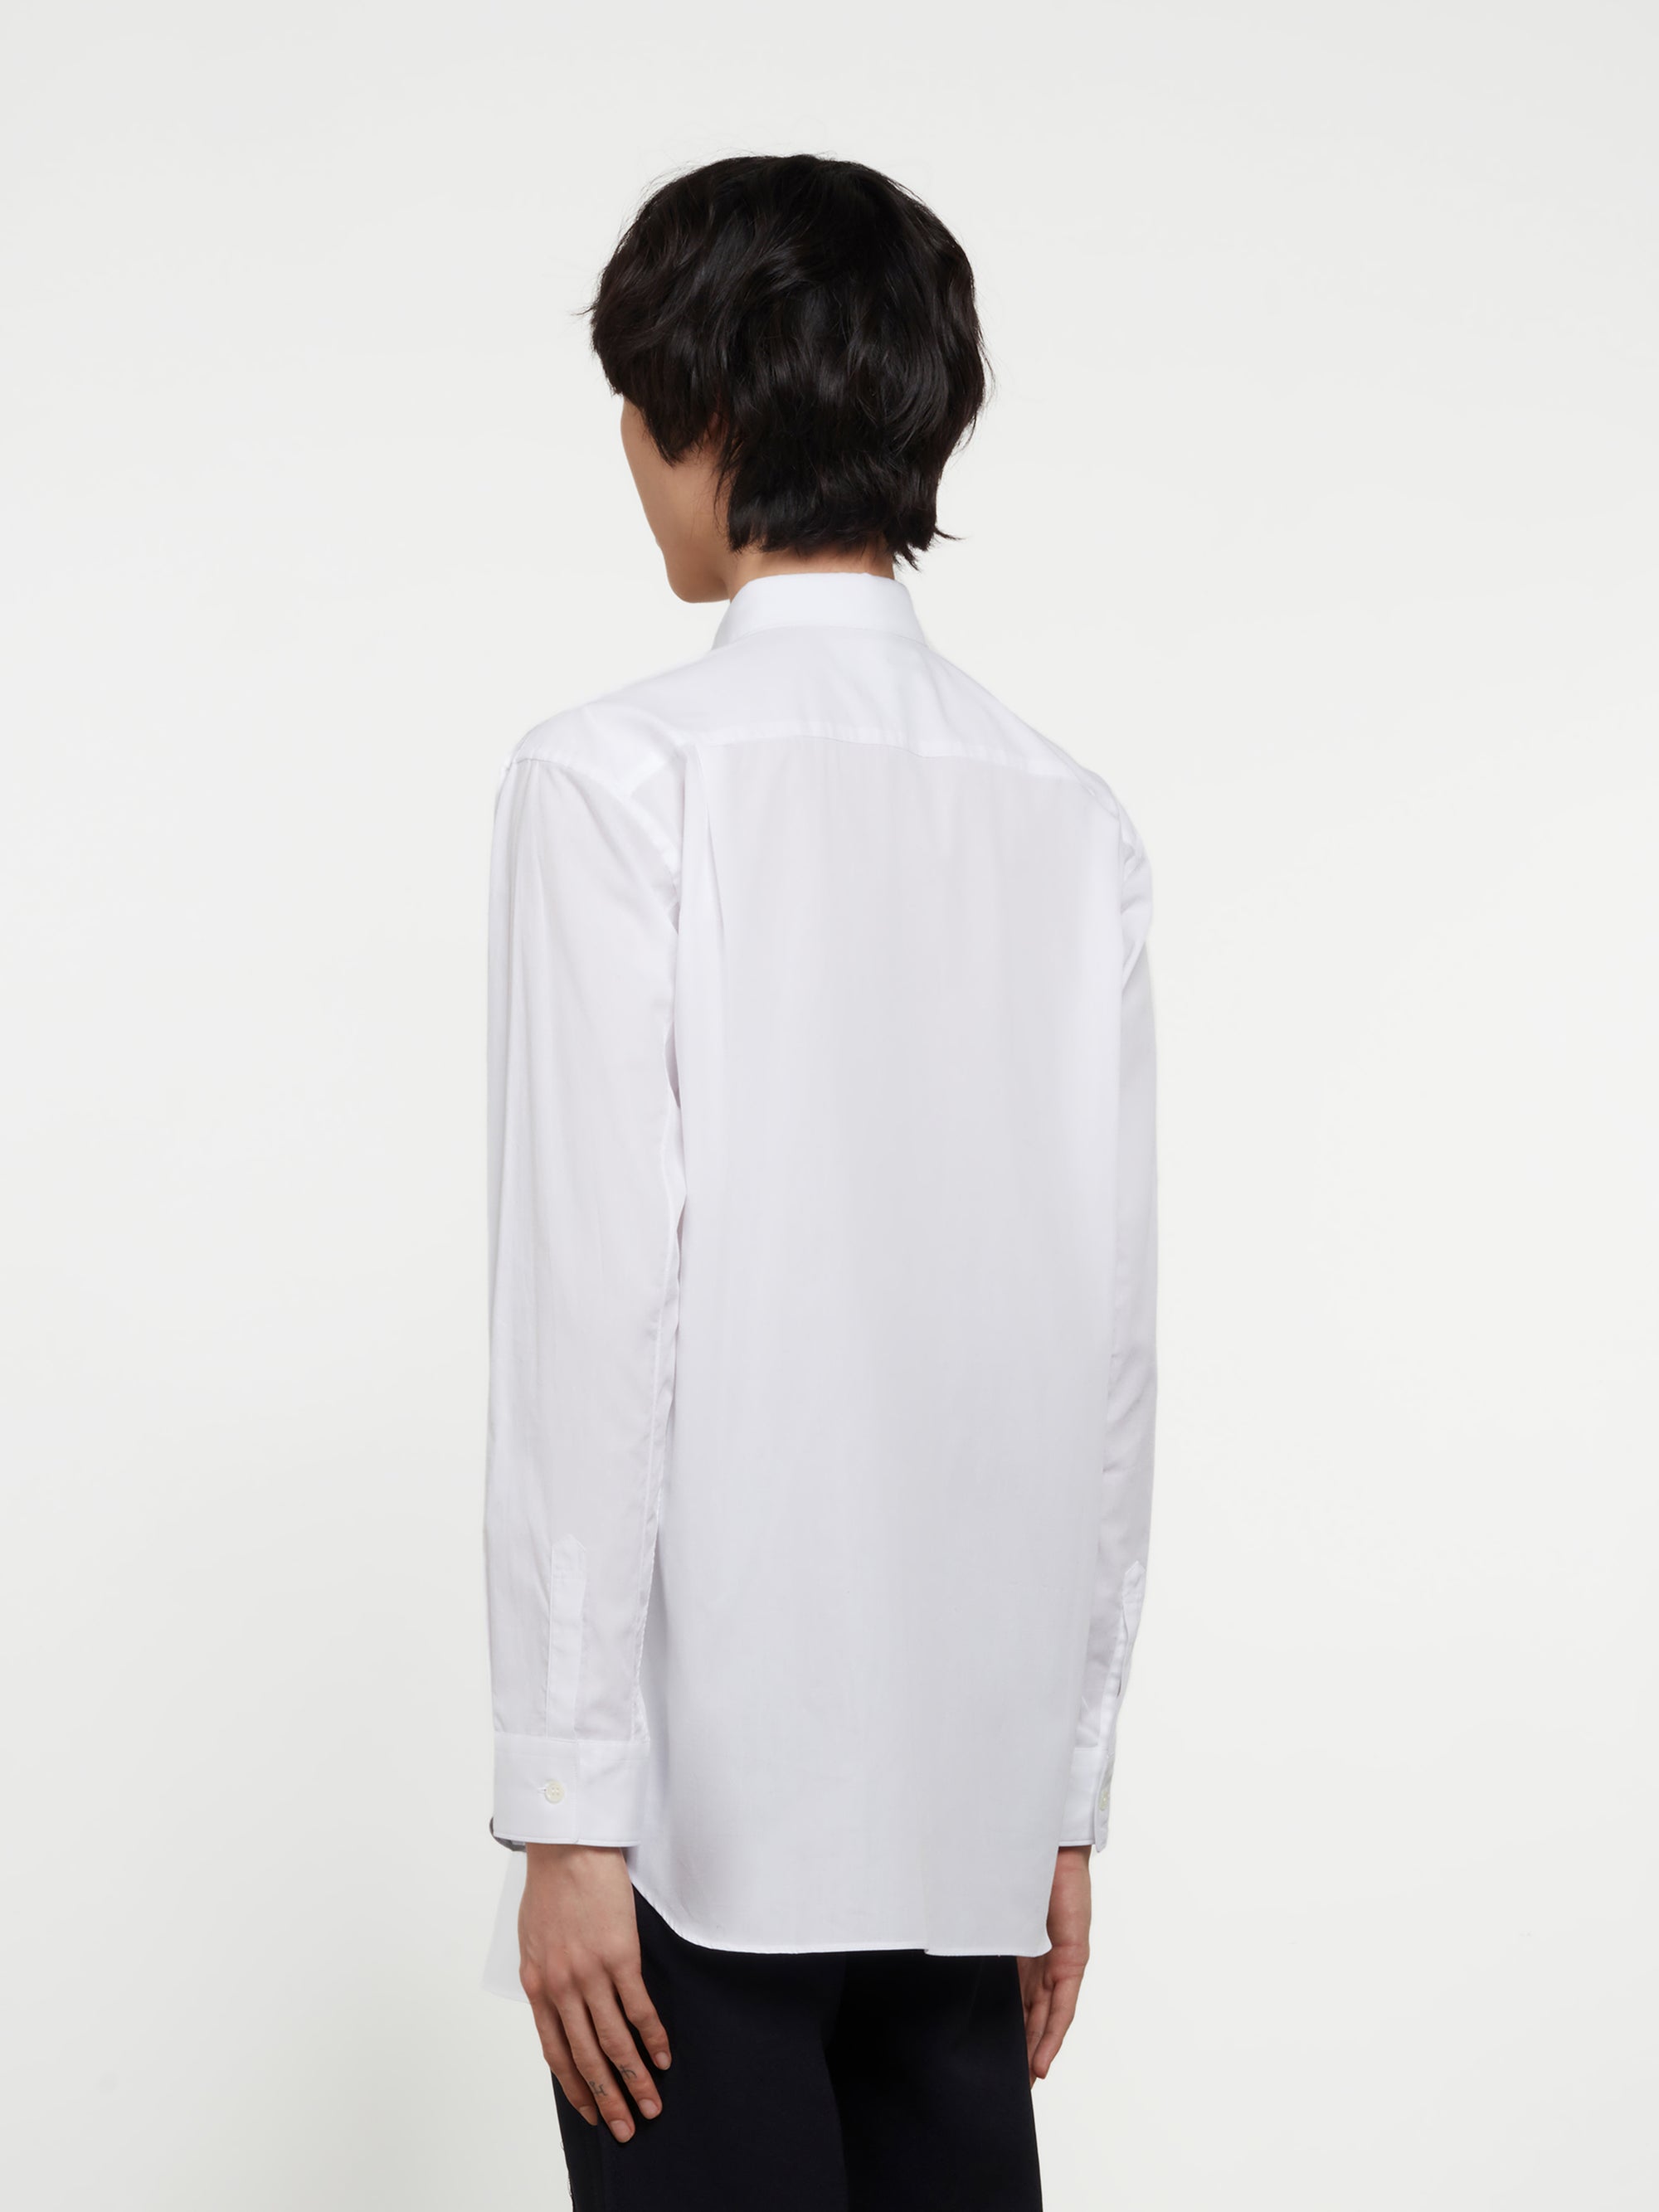 CDG Shirt - Lacoste Men's Poplin Shirt - (White) view 3